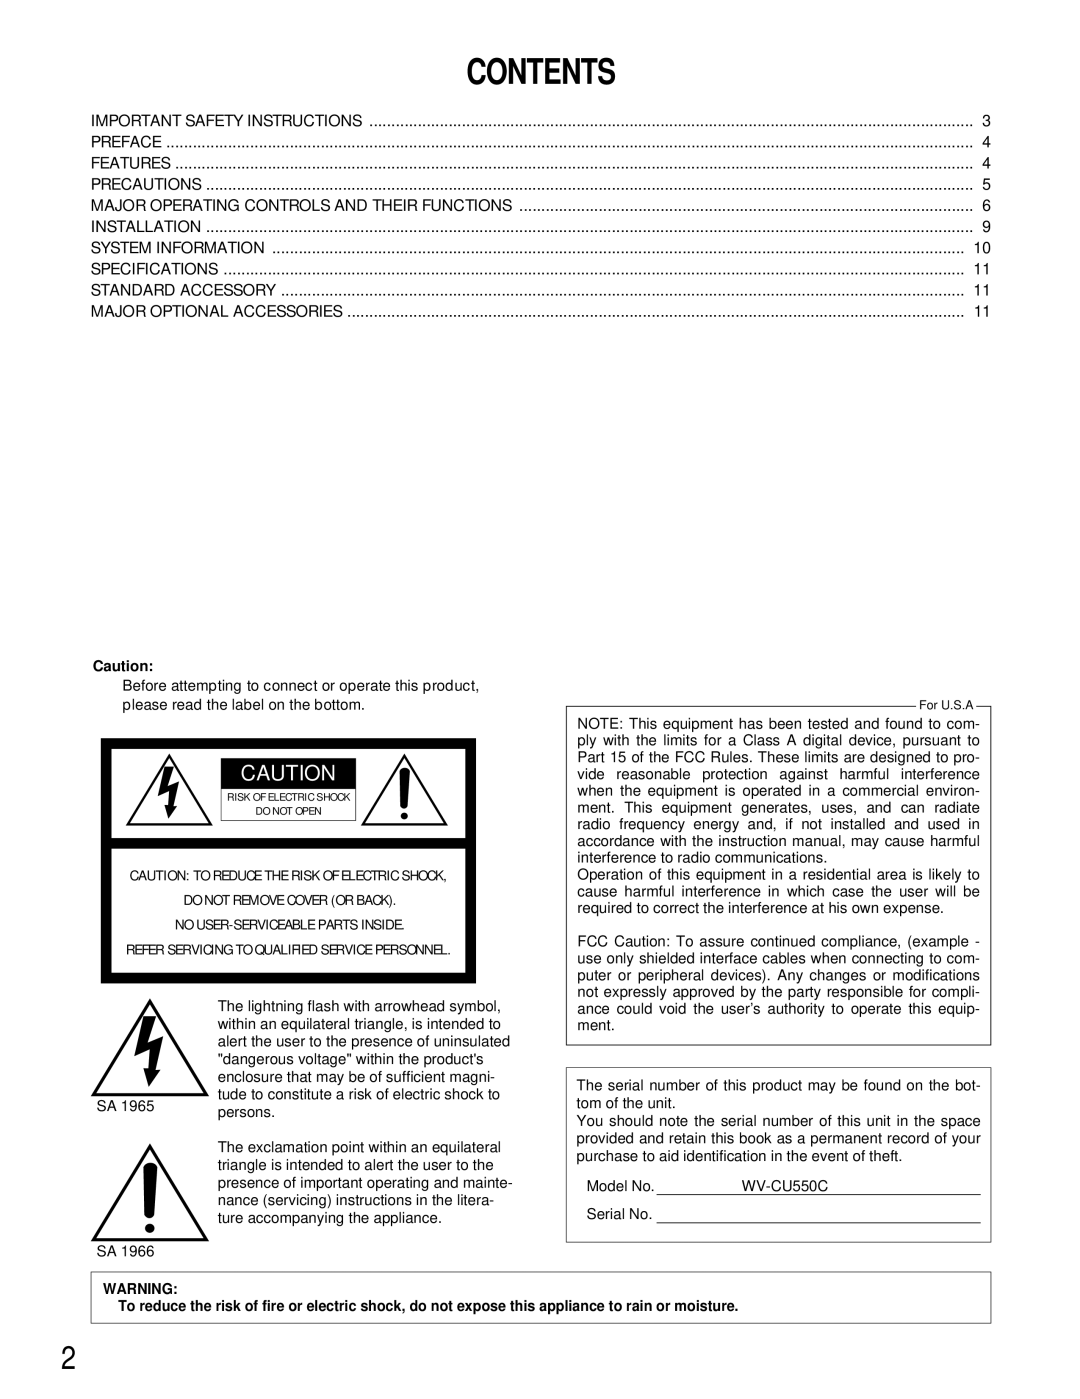 Panasonic WV-CU550C operating instructions Contents 